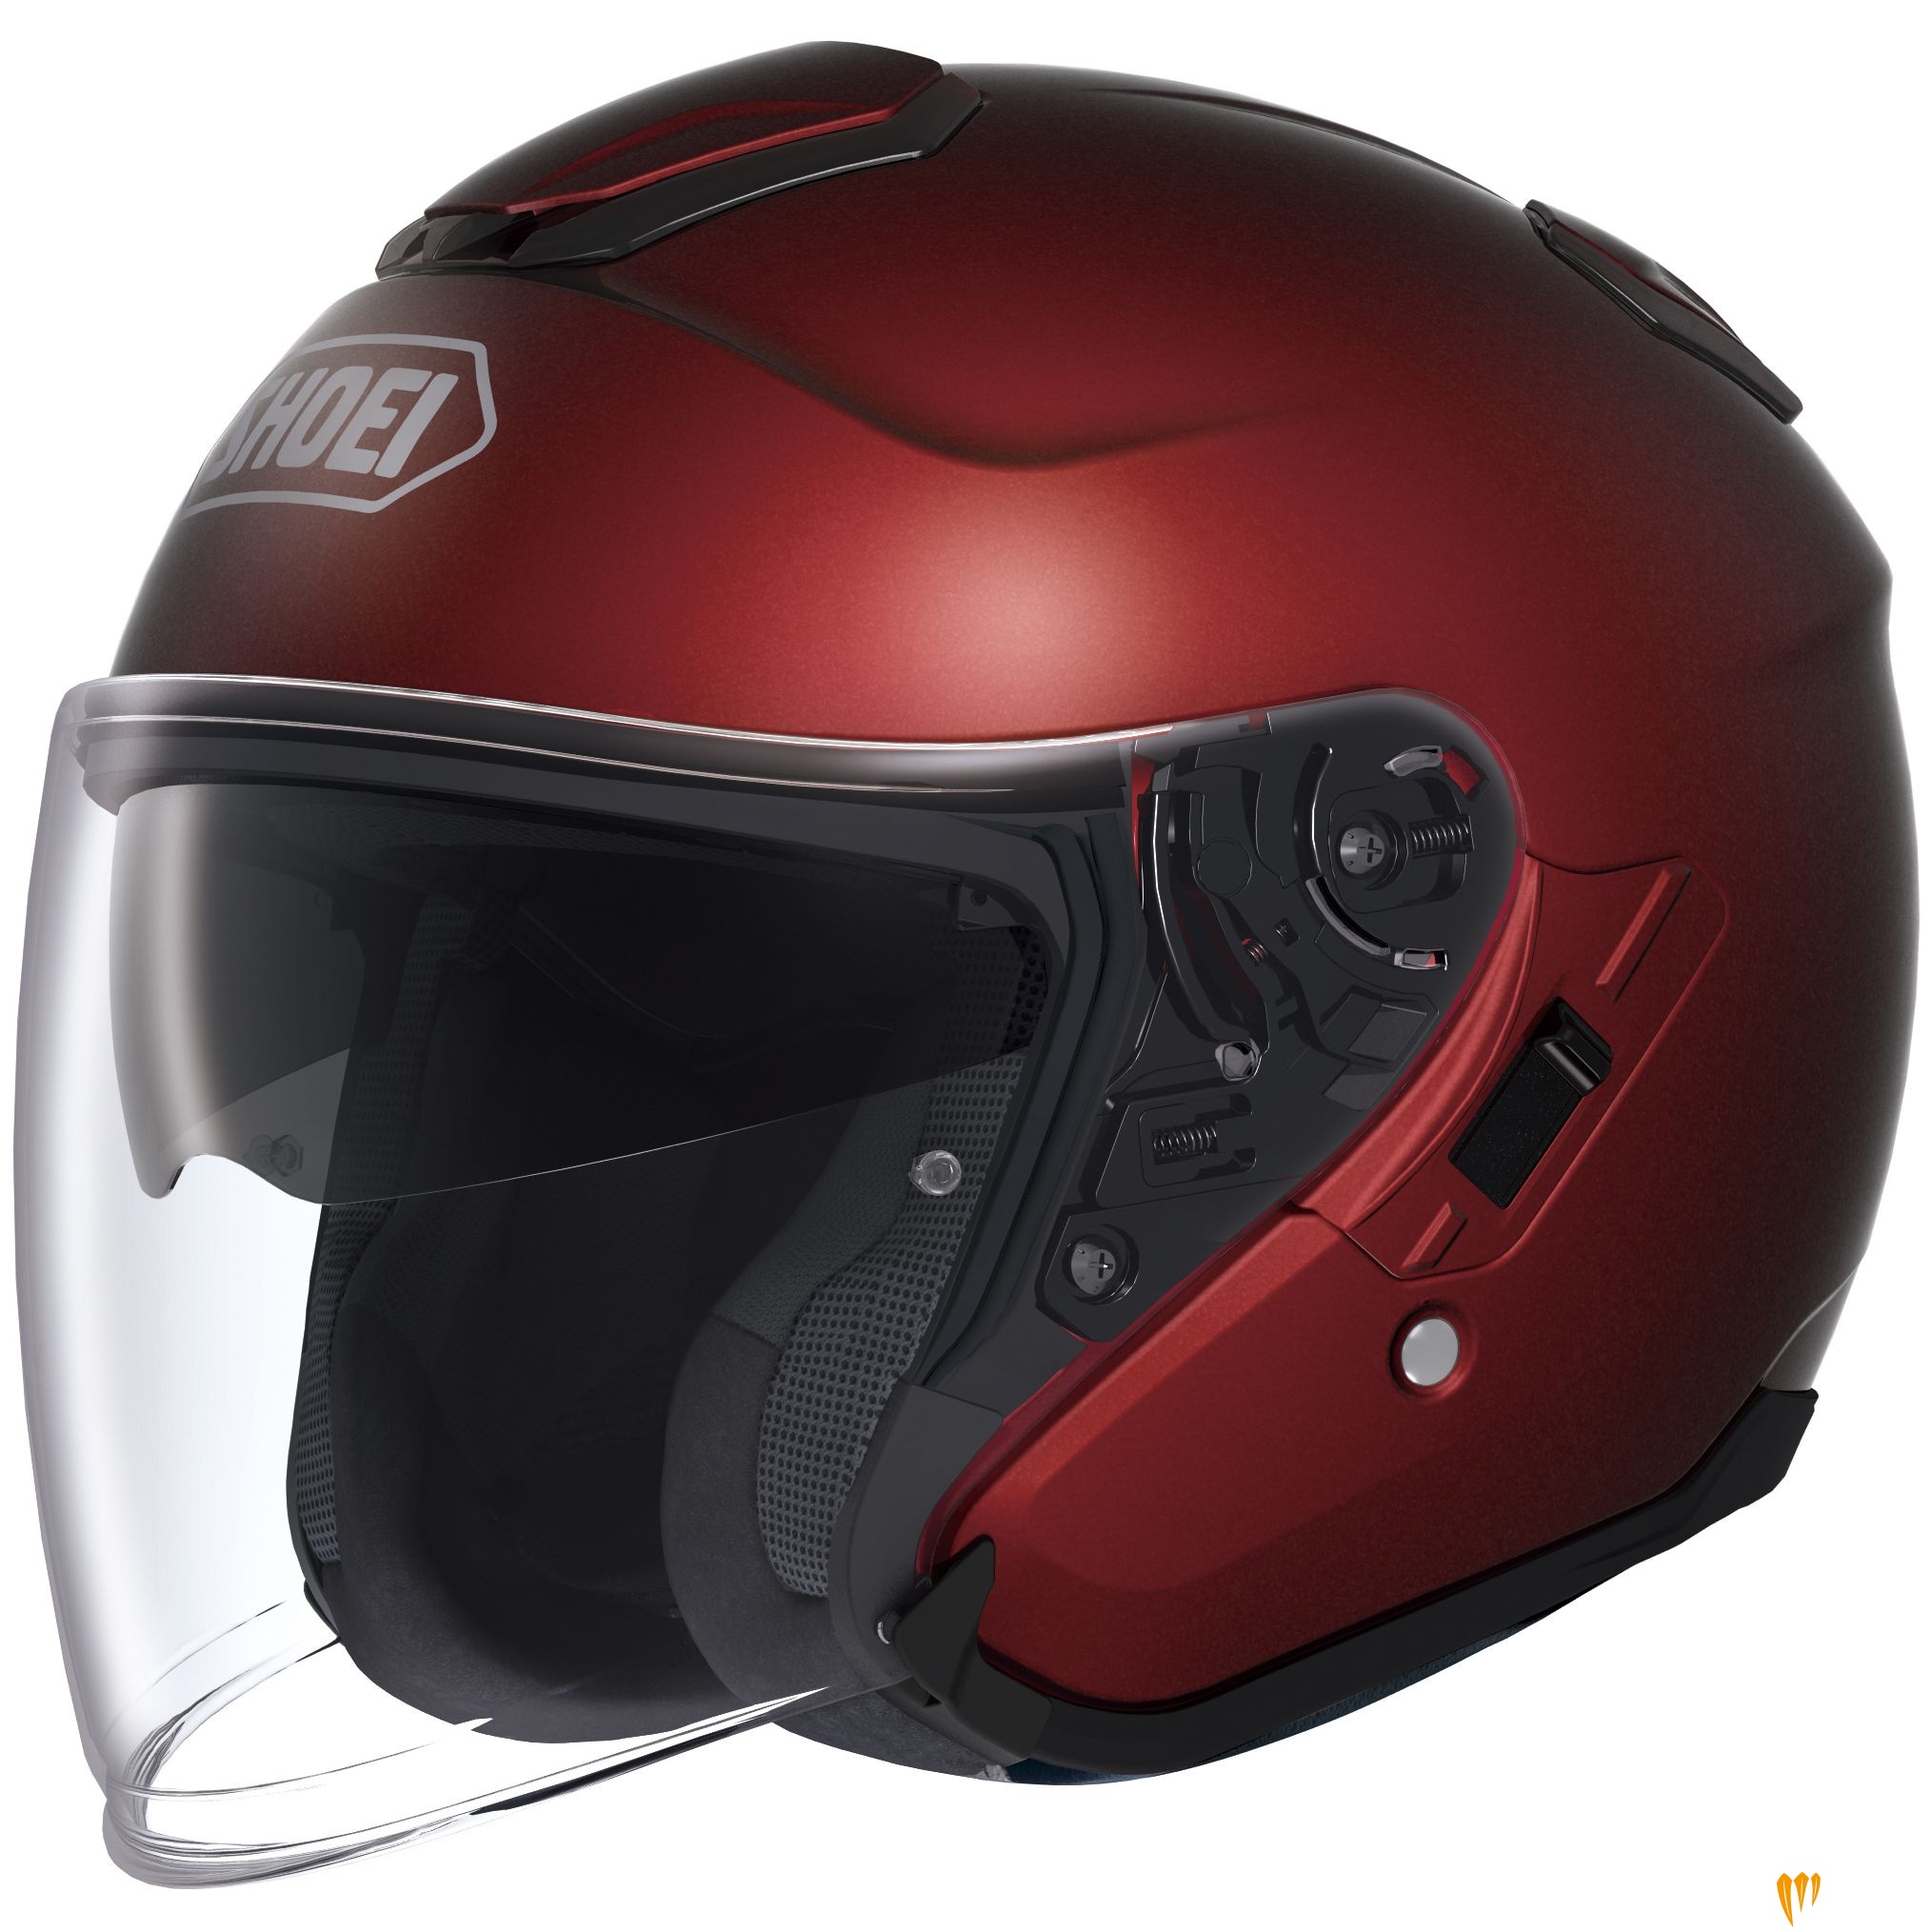 2013-shoei-j-cruise-helmet-wine-red-mcss.jpg